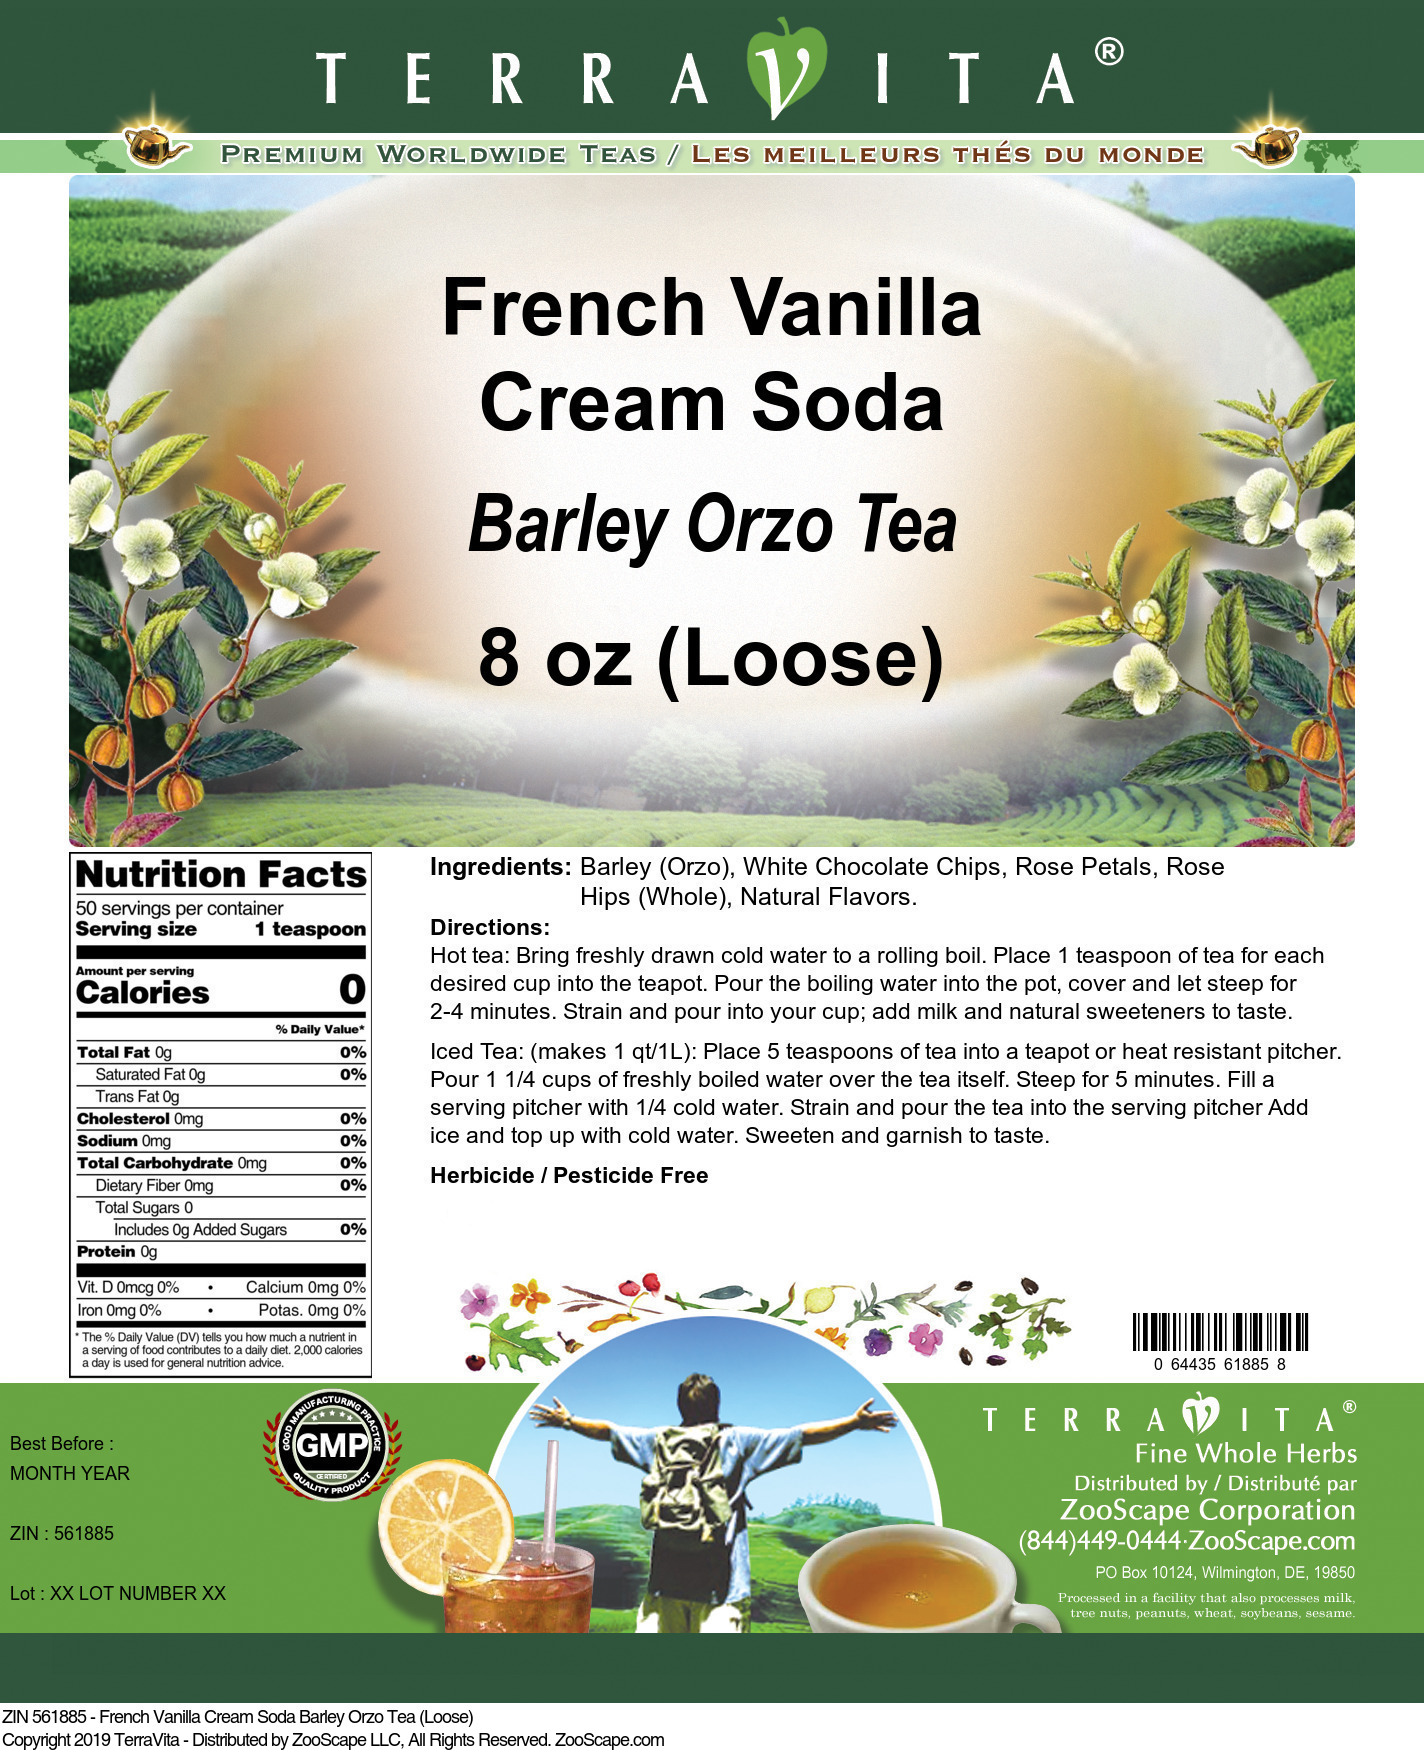 French Vanilla Cream Soda Barley Orzo Tea (Loose) - Label